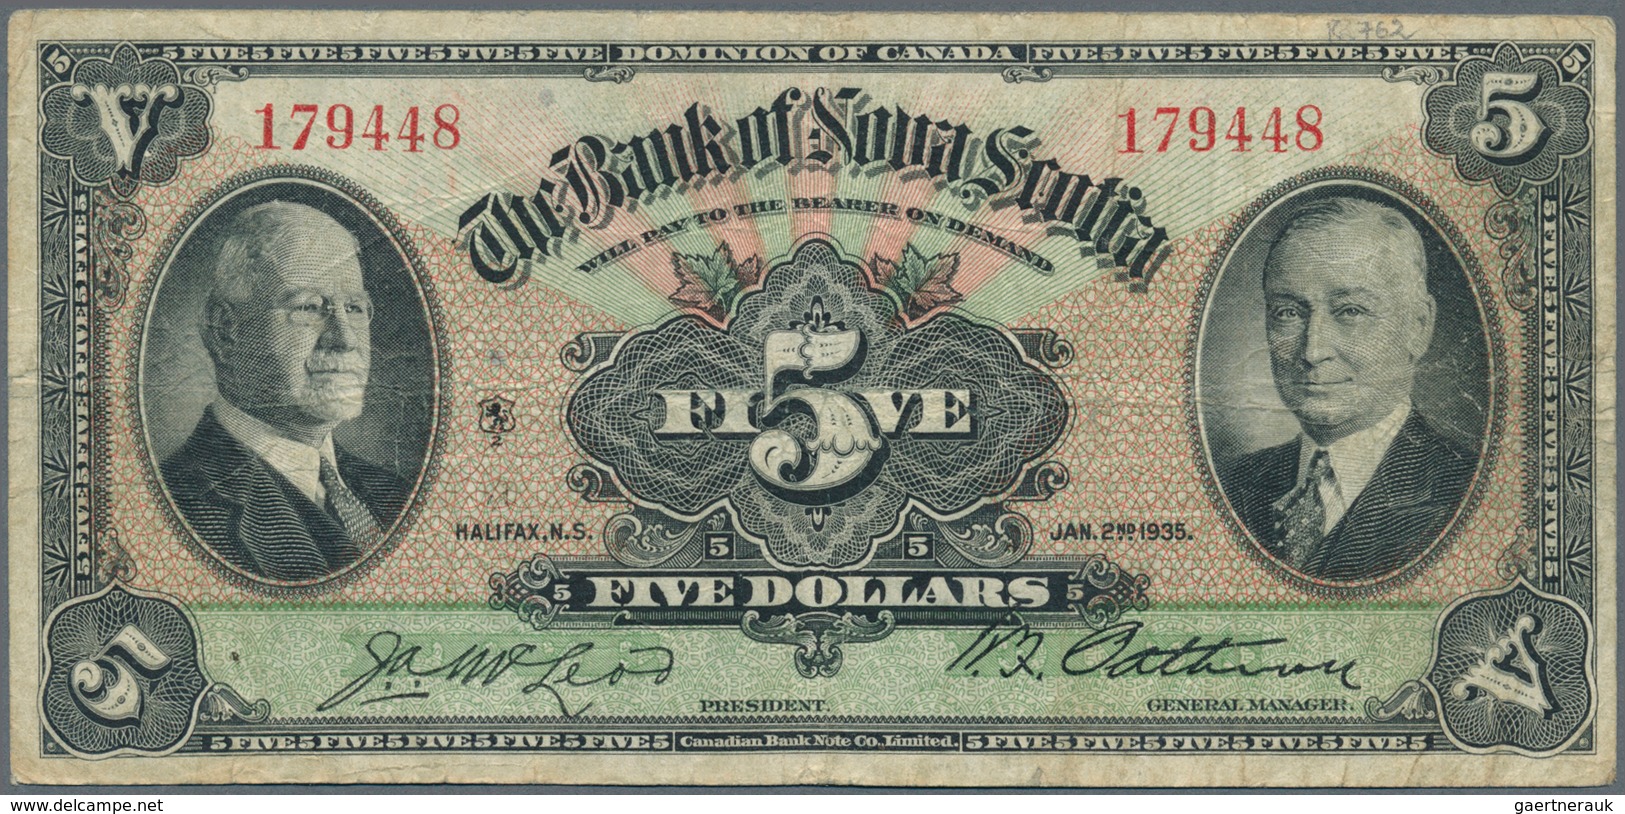 Canada: The Bank Of Nova Scotia 5 Dollars 1935, P.S632, Still Strong Paper, Lightly Toned And Severa - Kanada